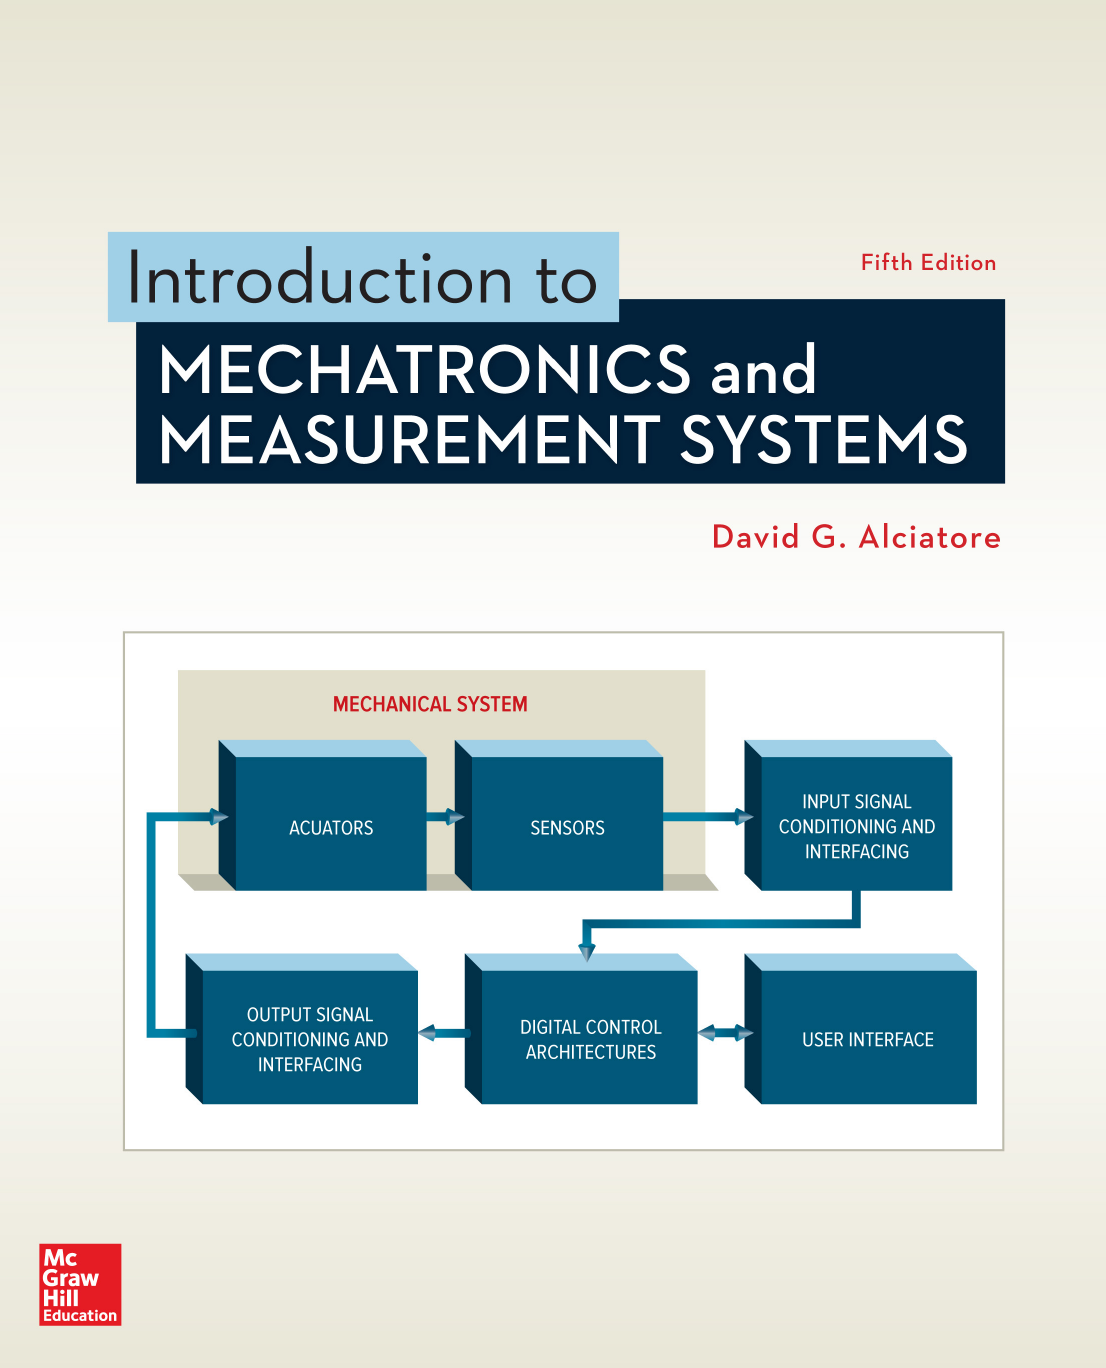 Applied Electronics and measurement книга. Introduction to Mechatronics. Fundamentals of Mechatronics.